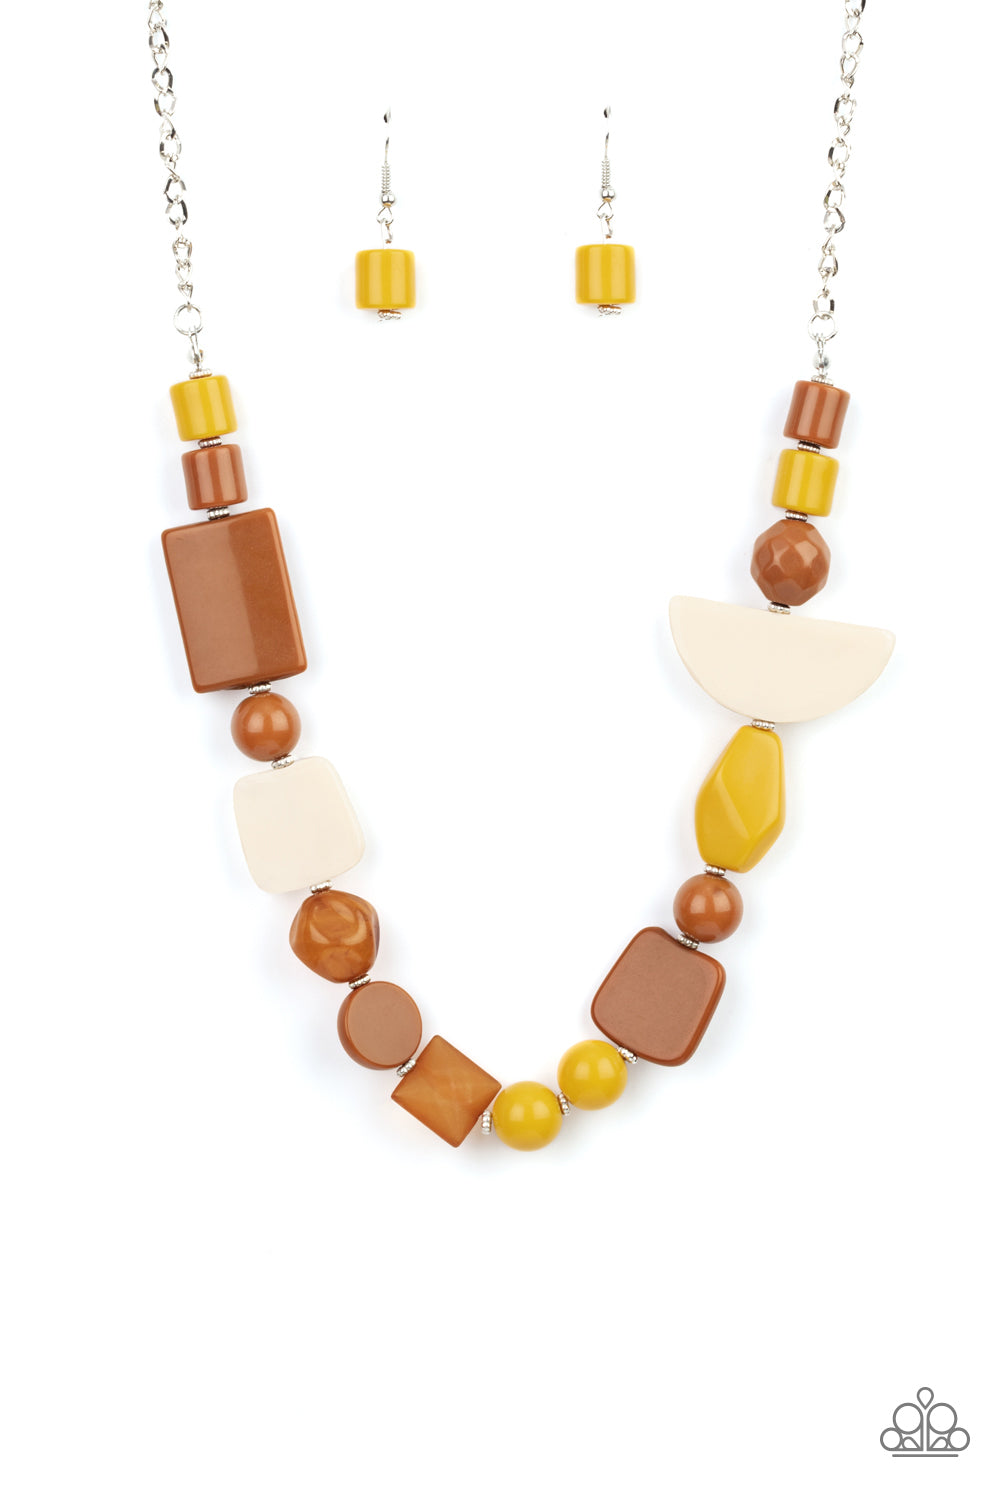 Finding Balance - Yellow - Paparazzi Accessories | Yellow necklace, Sale  necklace, Necklace earring set